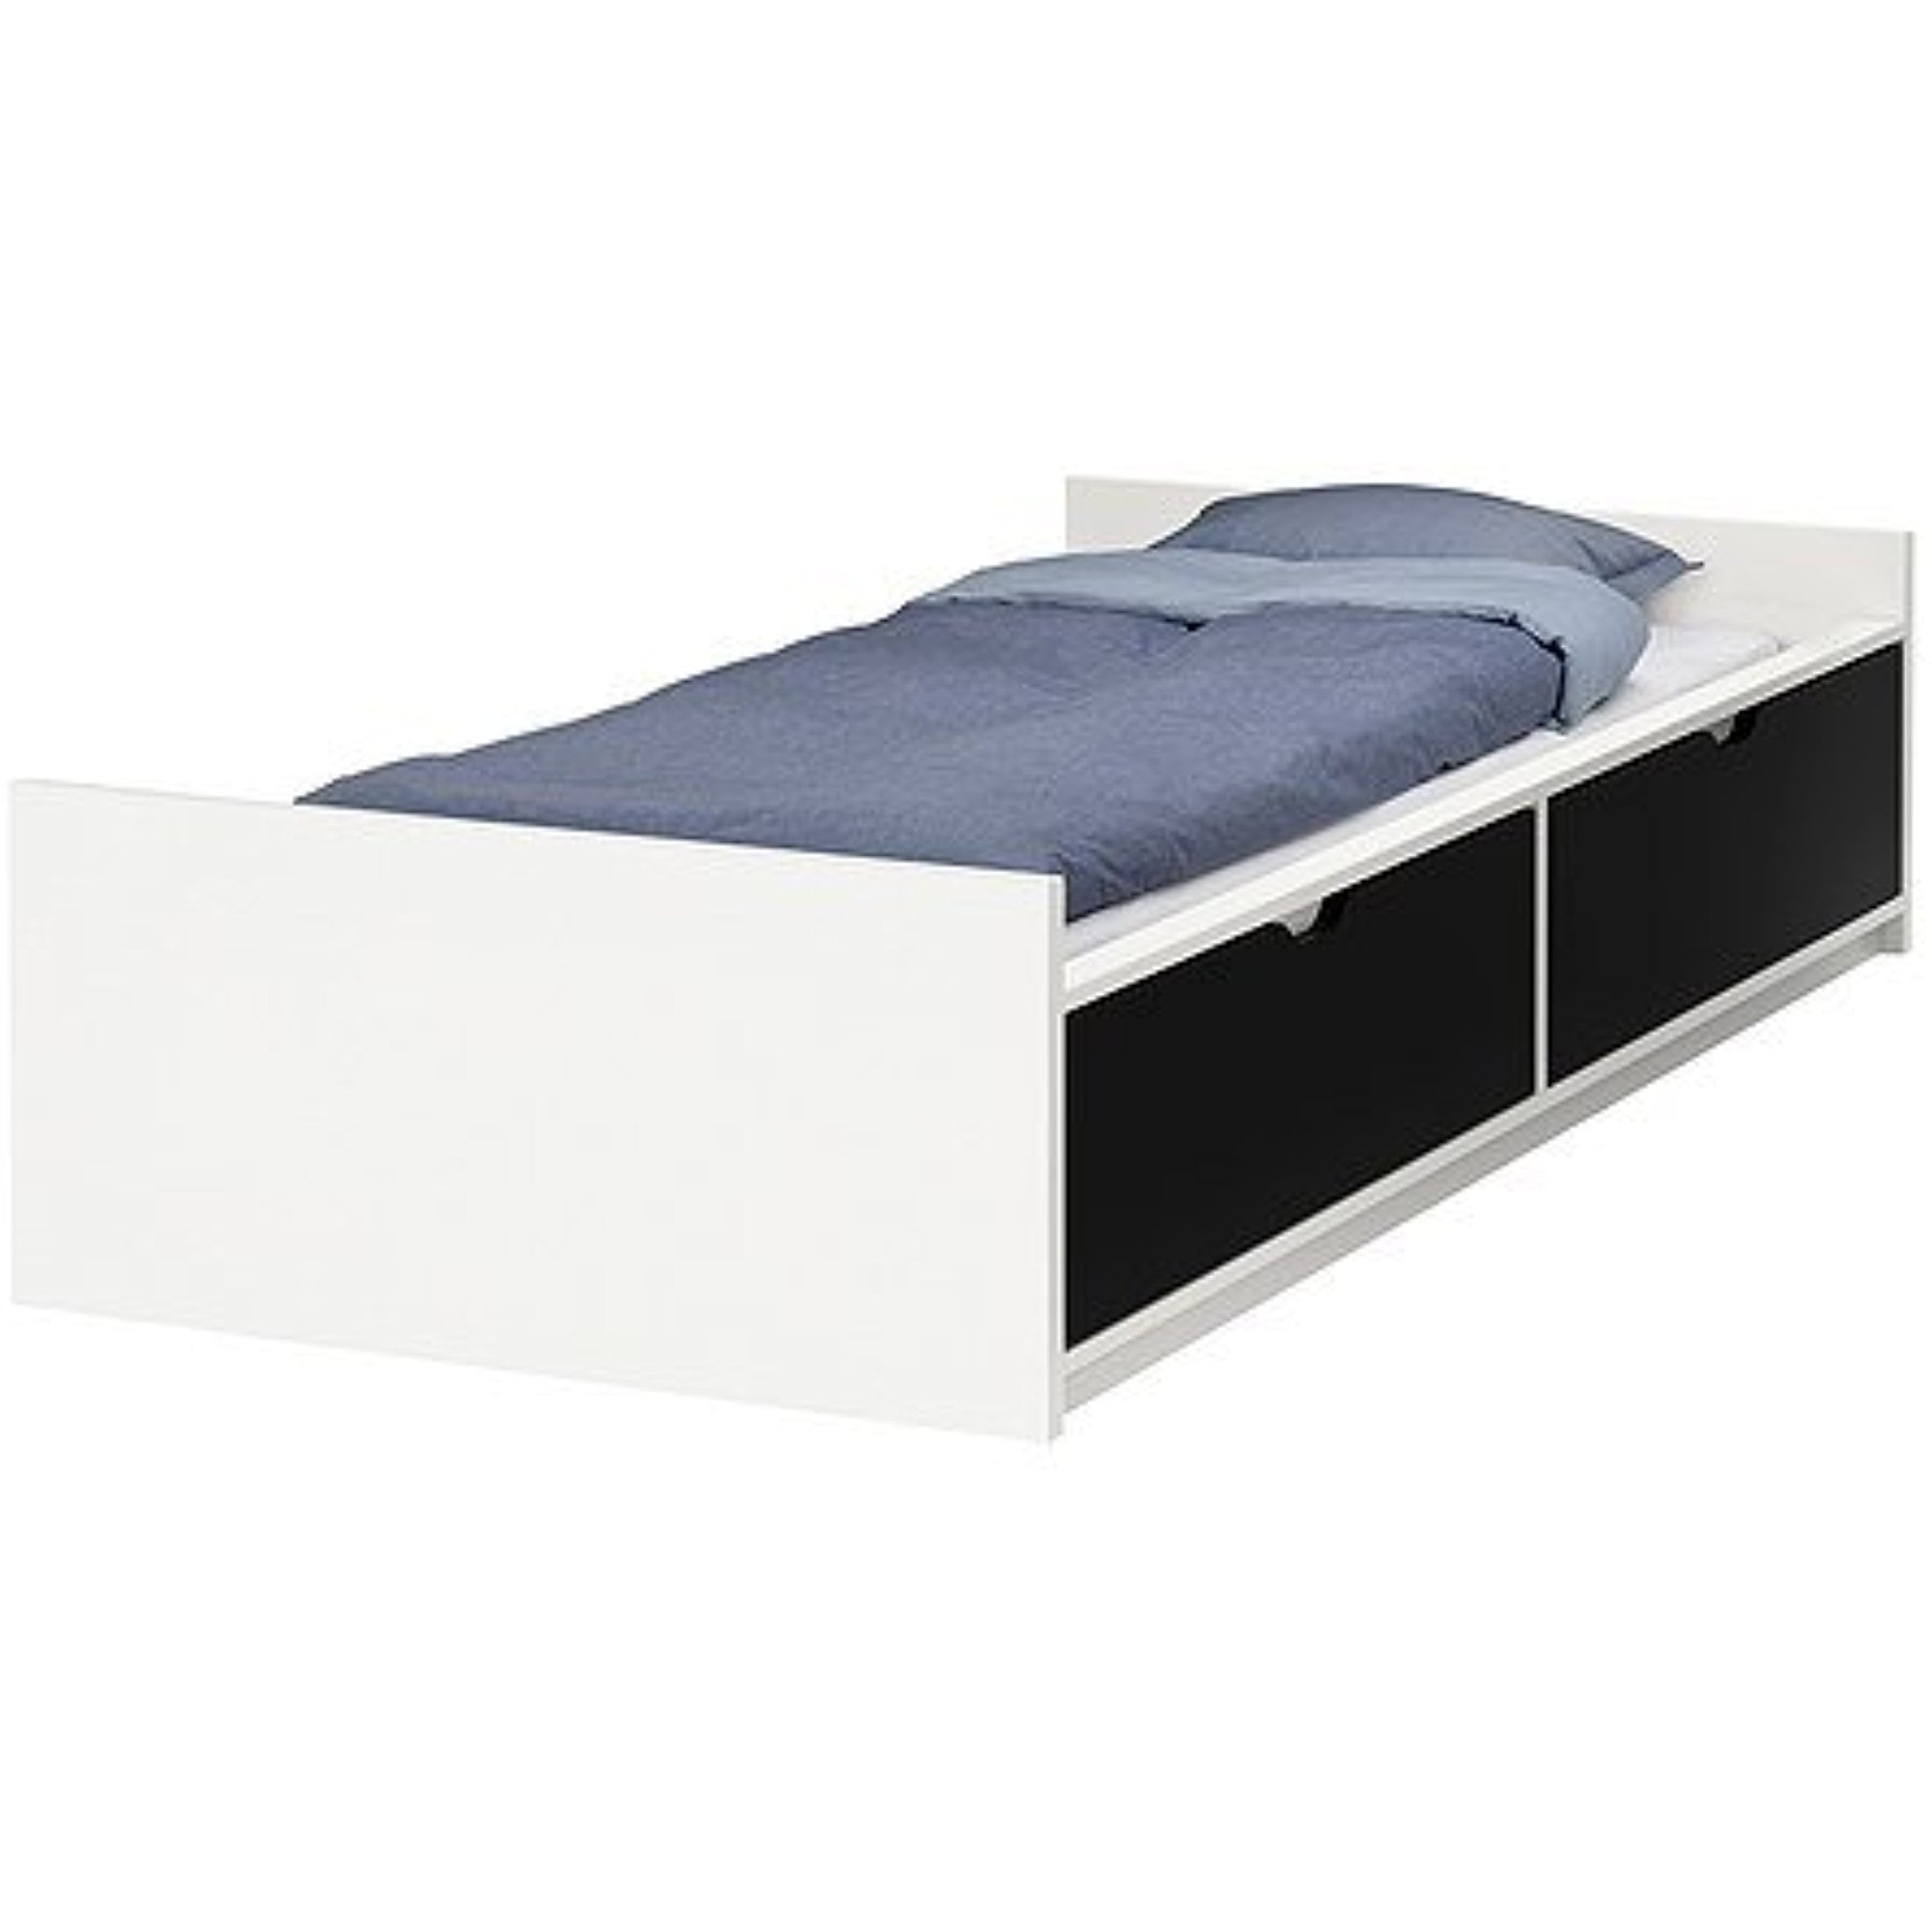 Ikea Twin Size Bed Frame W Storage, Ikea Bed Frame Slats Instructions